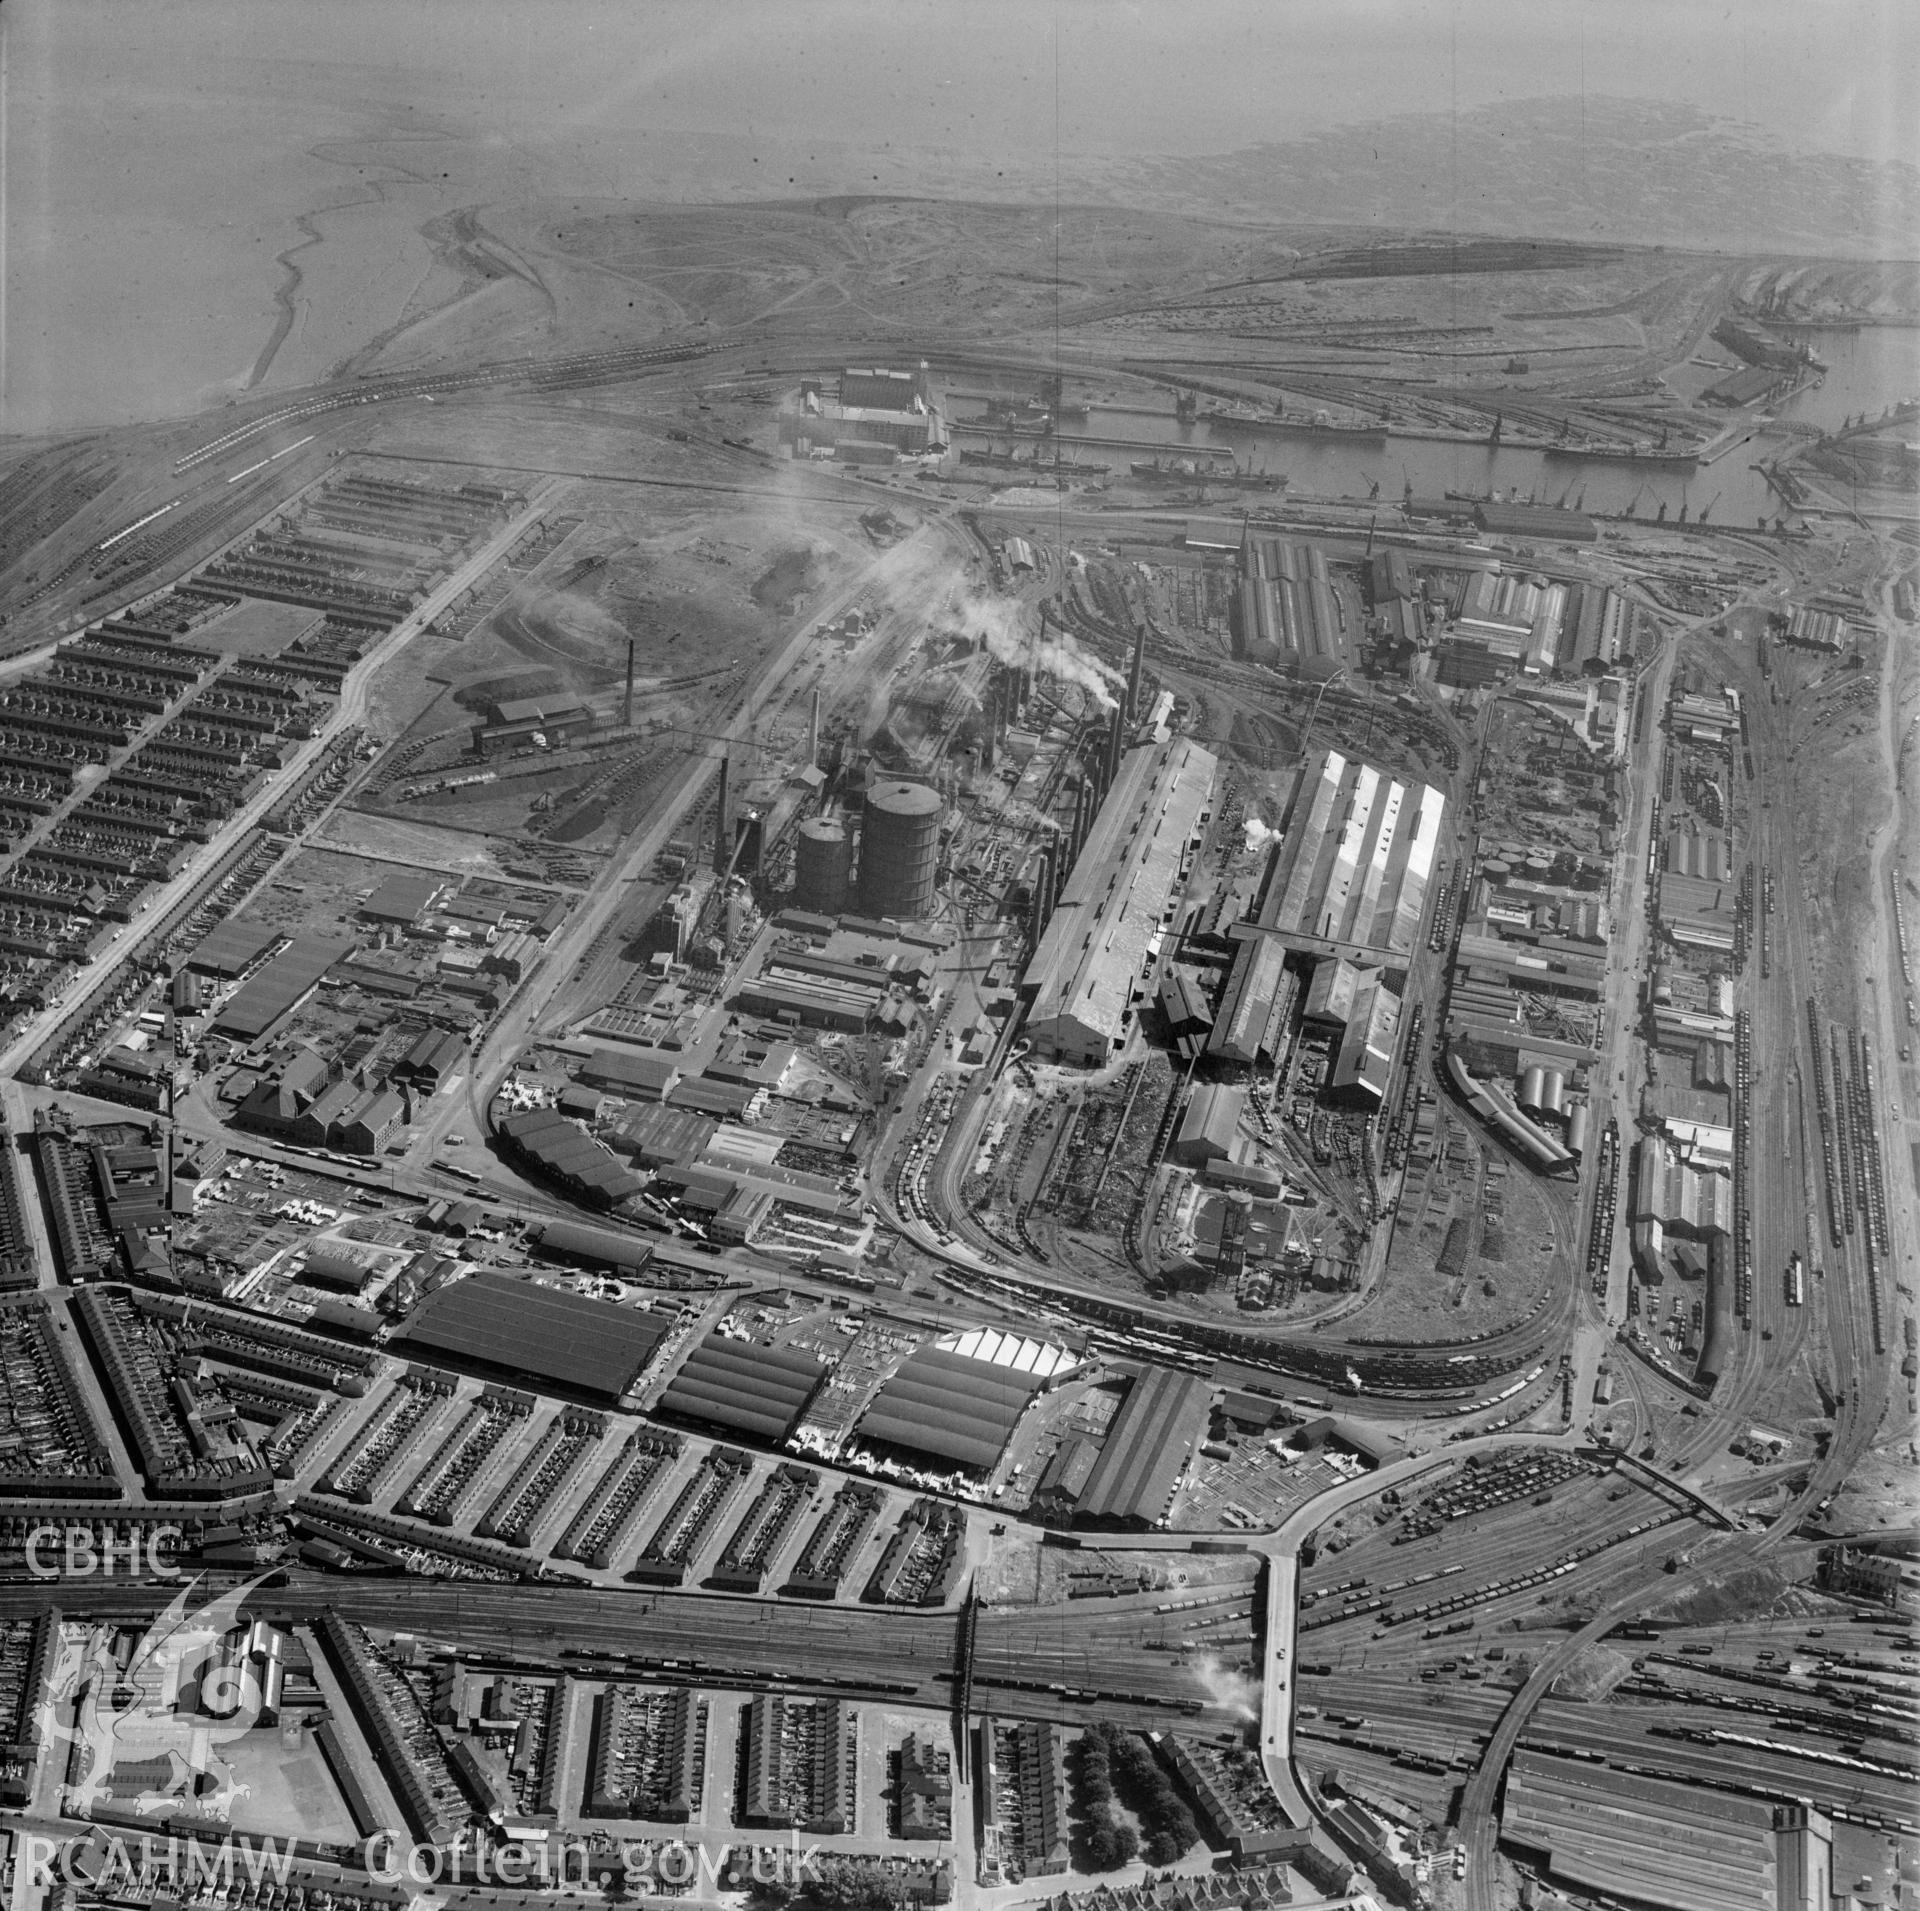 View of Guest, Keen & Baldwins Iron & Steel Ltd., East Moors, Cardiff